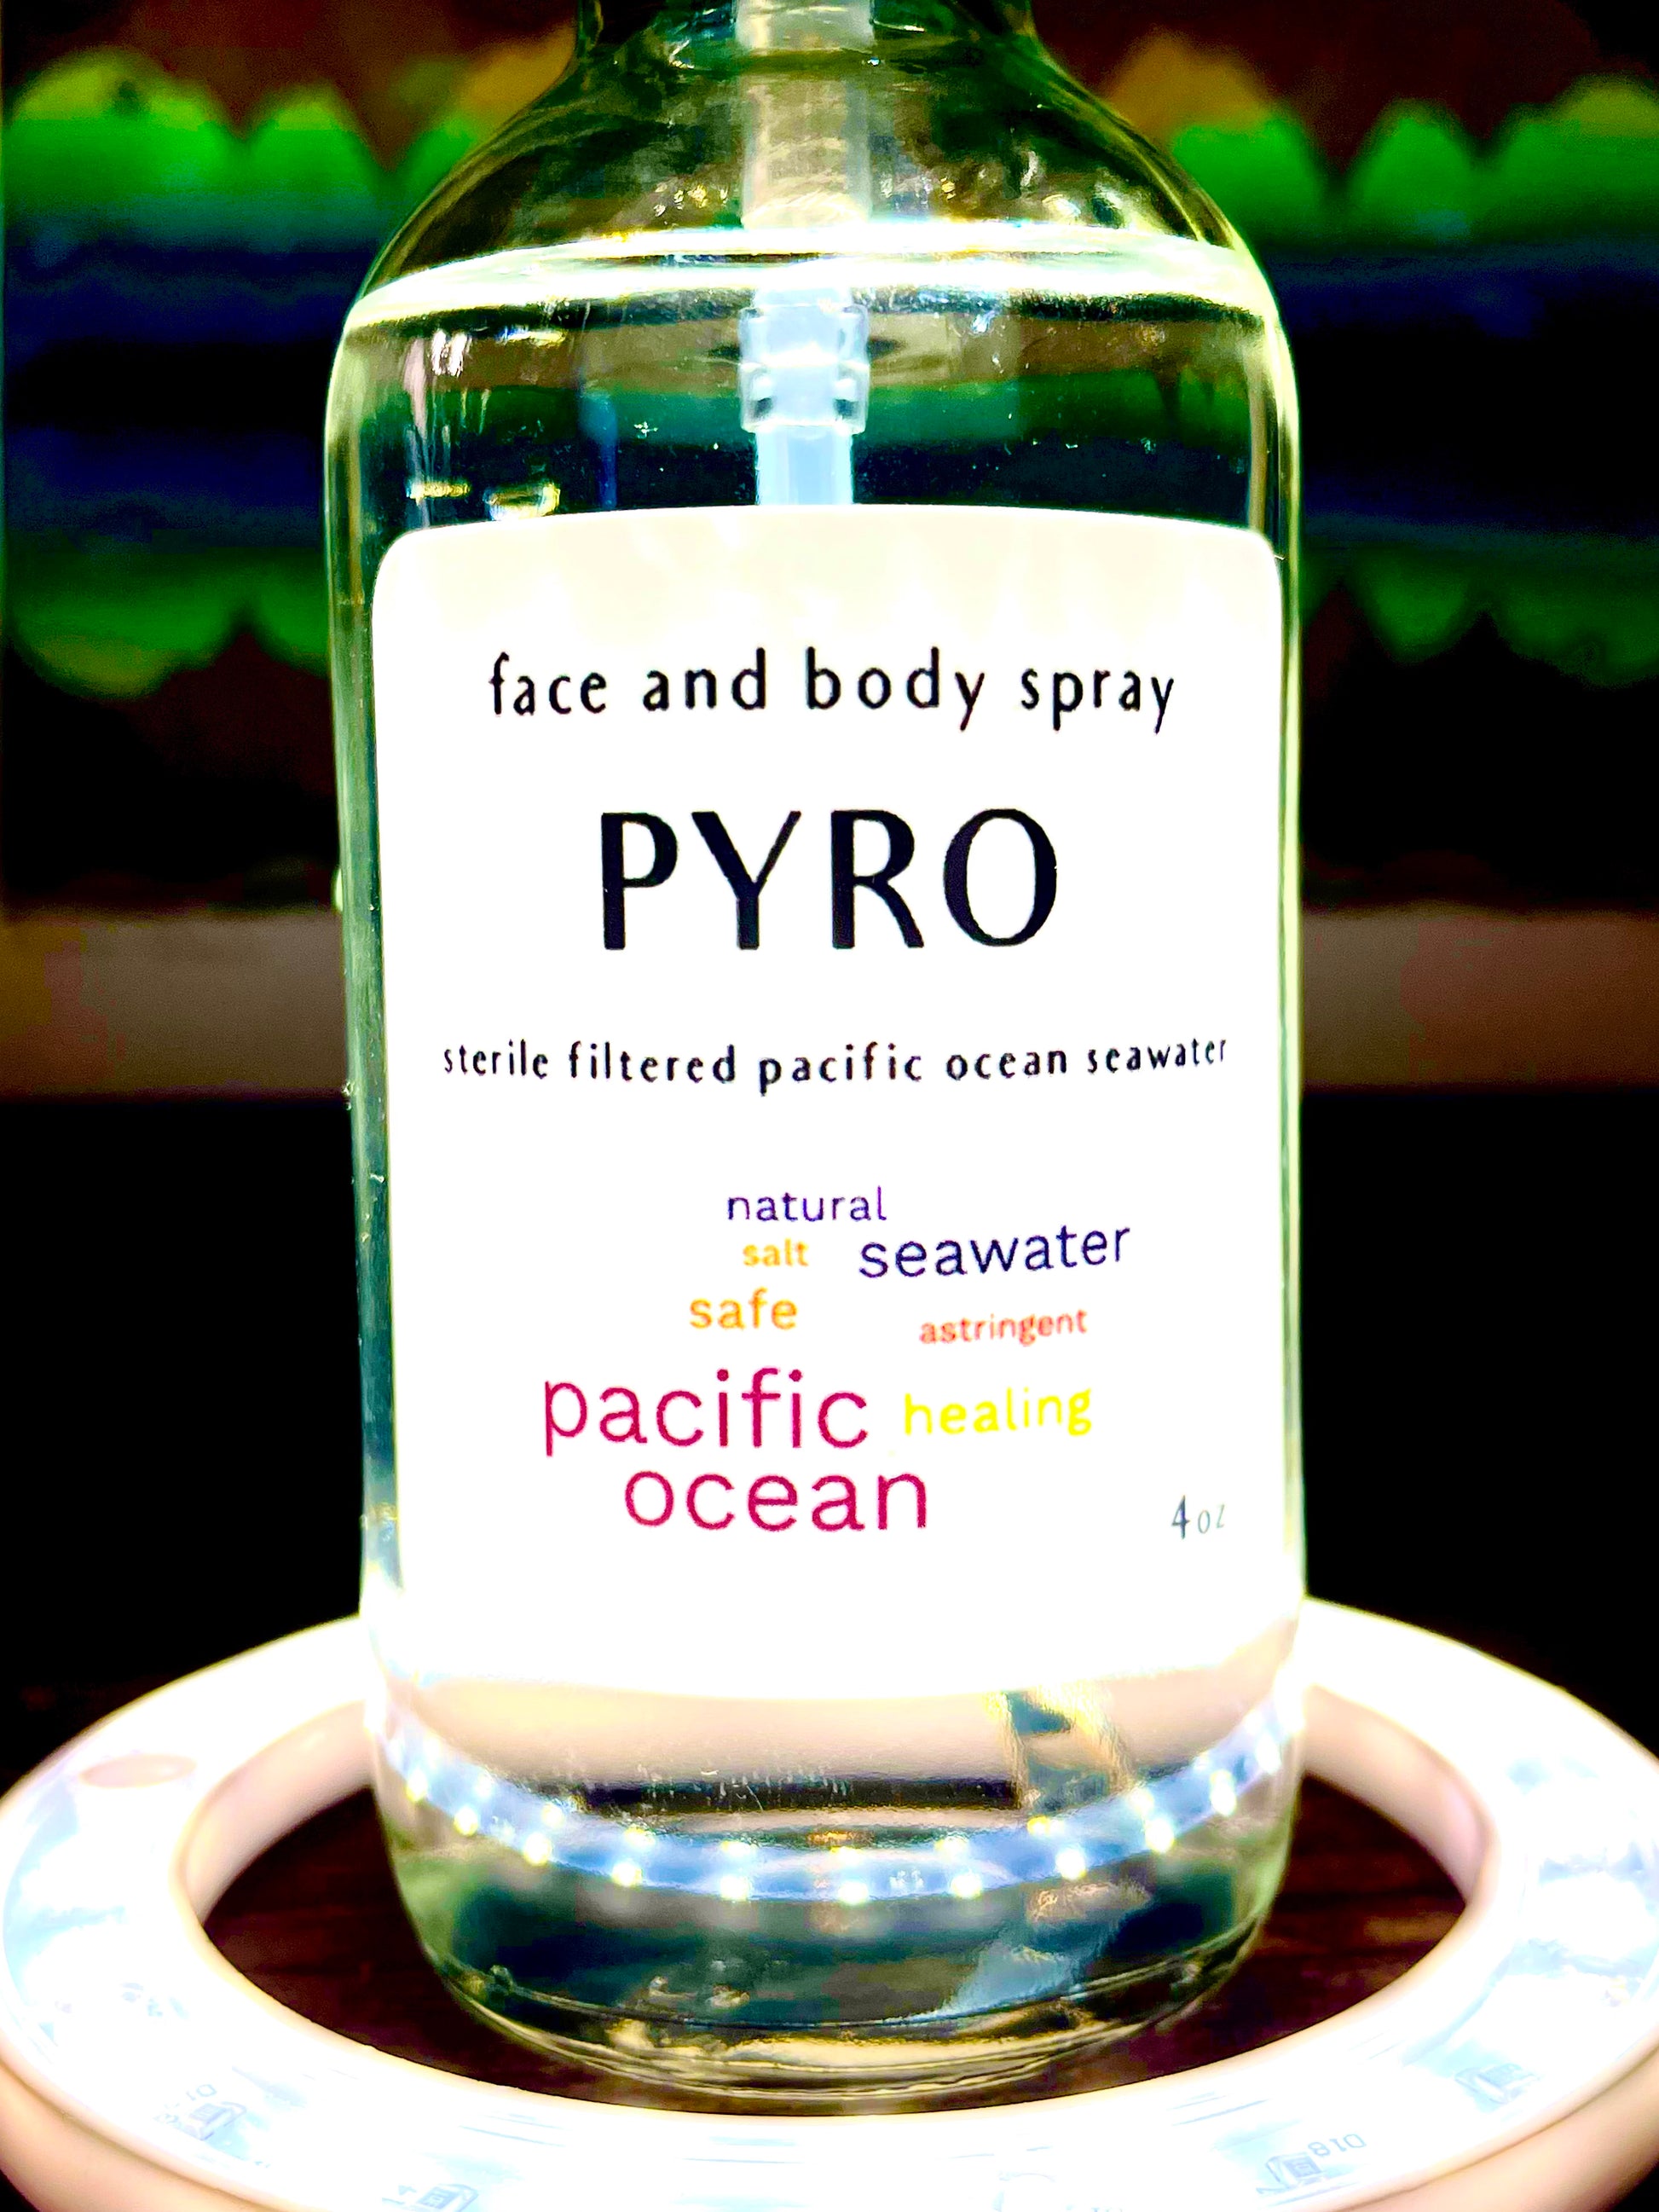 pure pacific ocean PYRO seawater natural organic clean safe